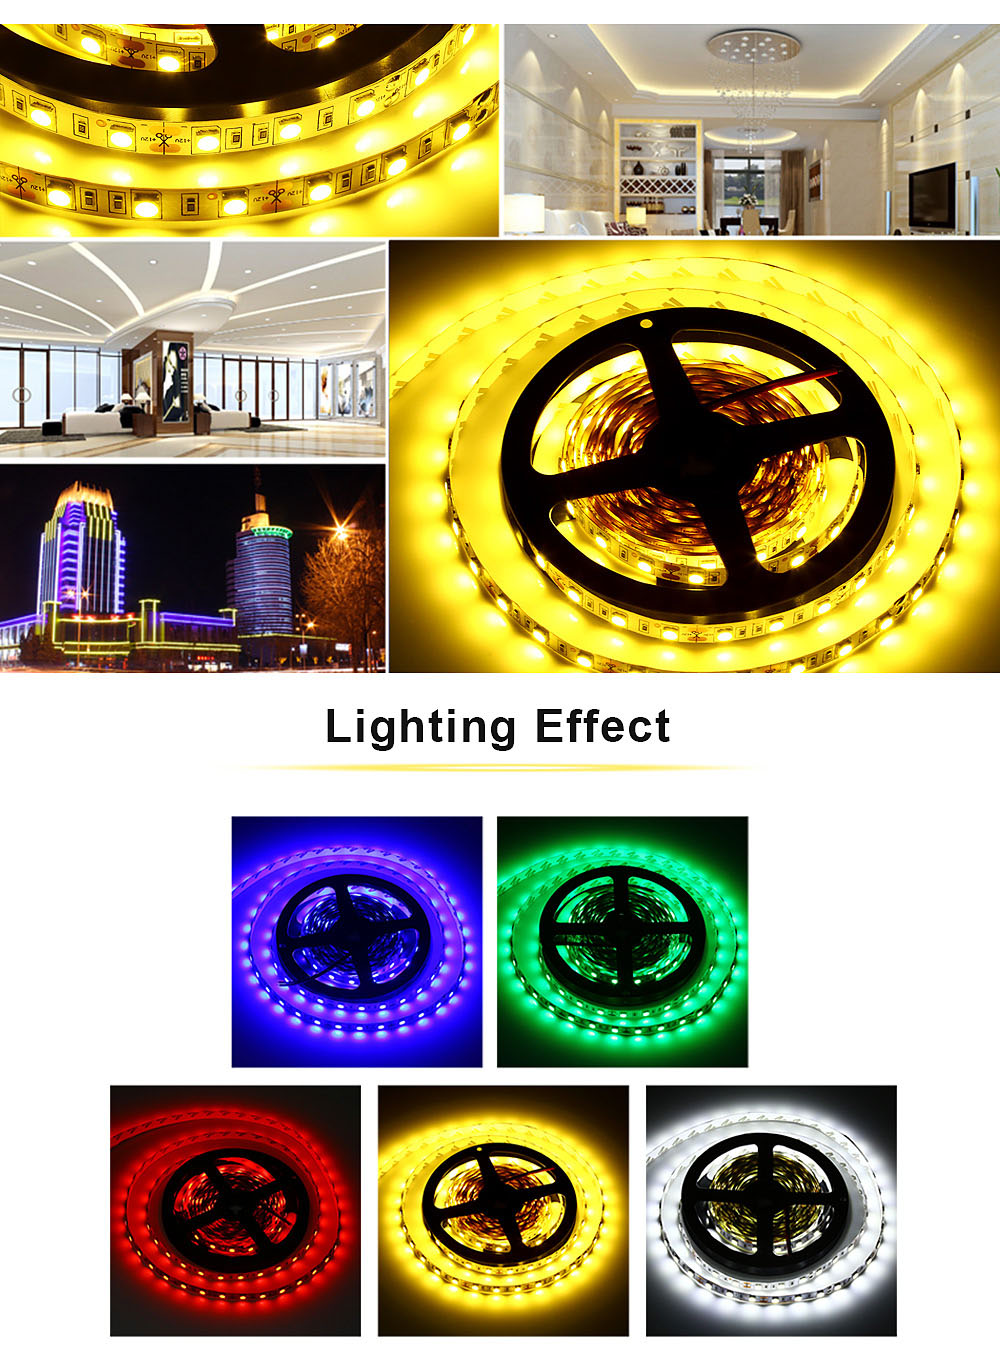 5M 300 LEDs SMD 5050 Flexible Strip Light Christmas Decorative Lamp